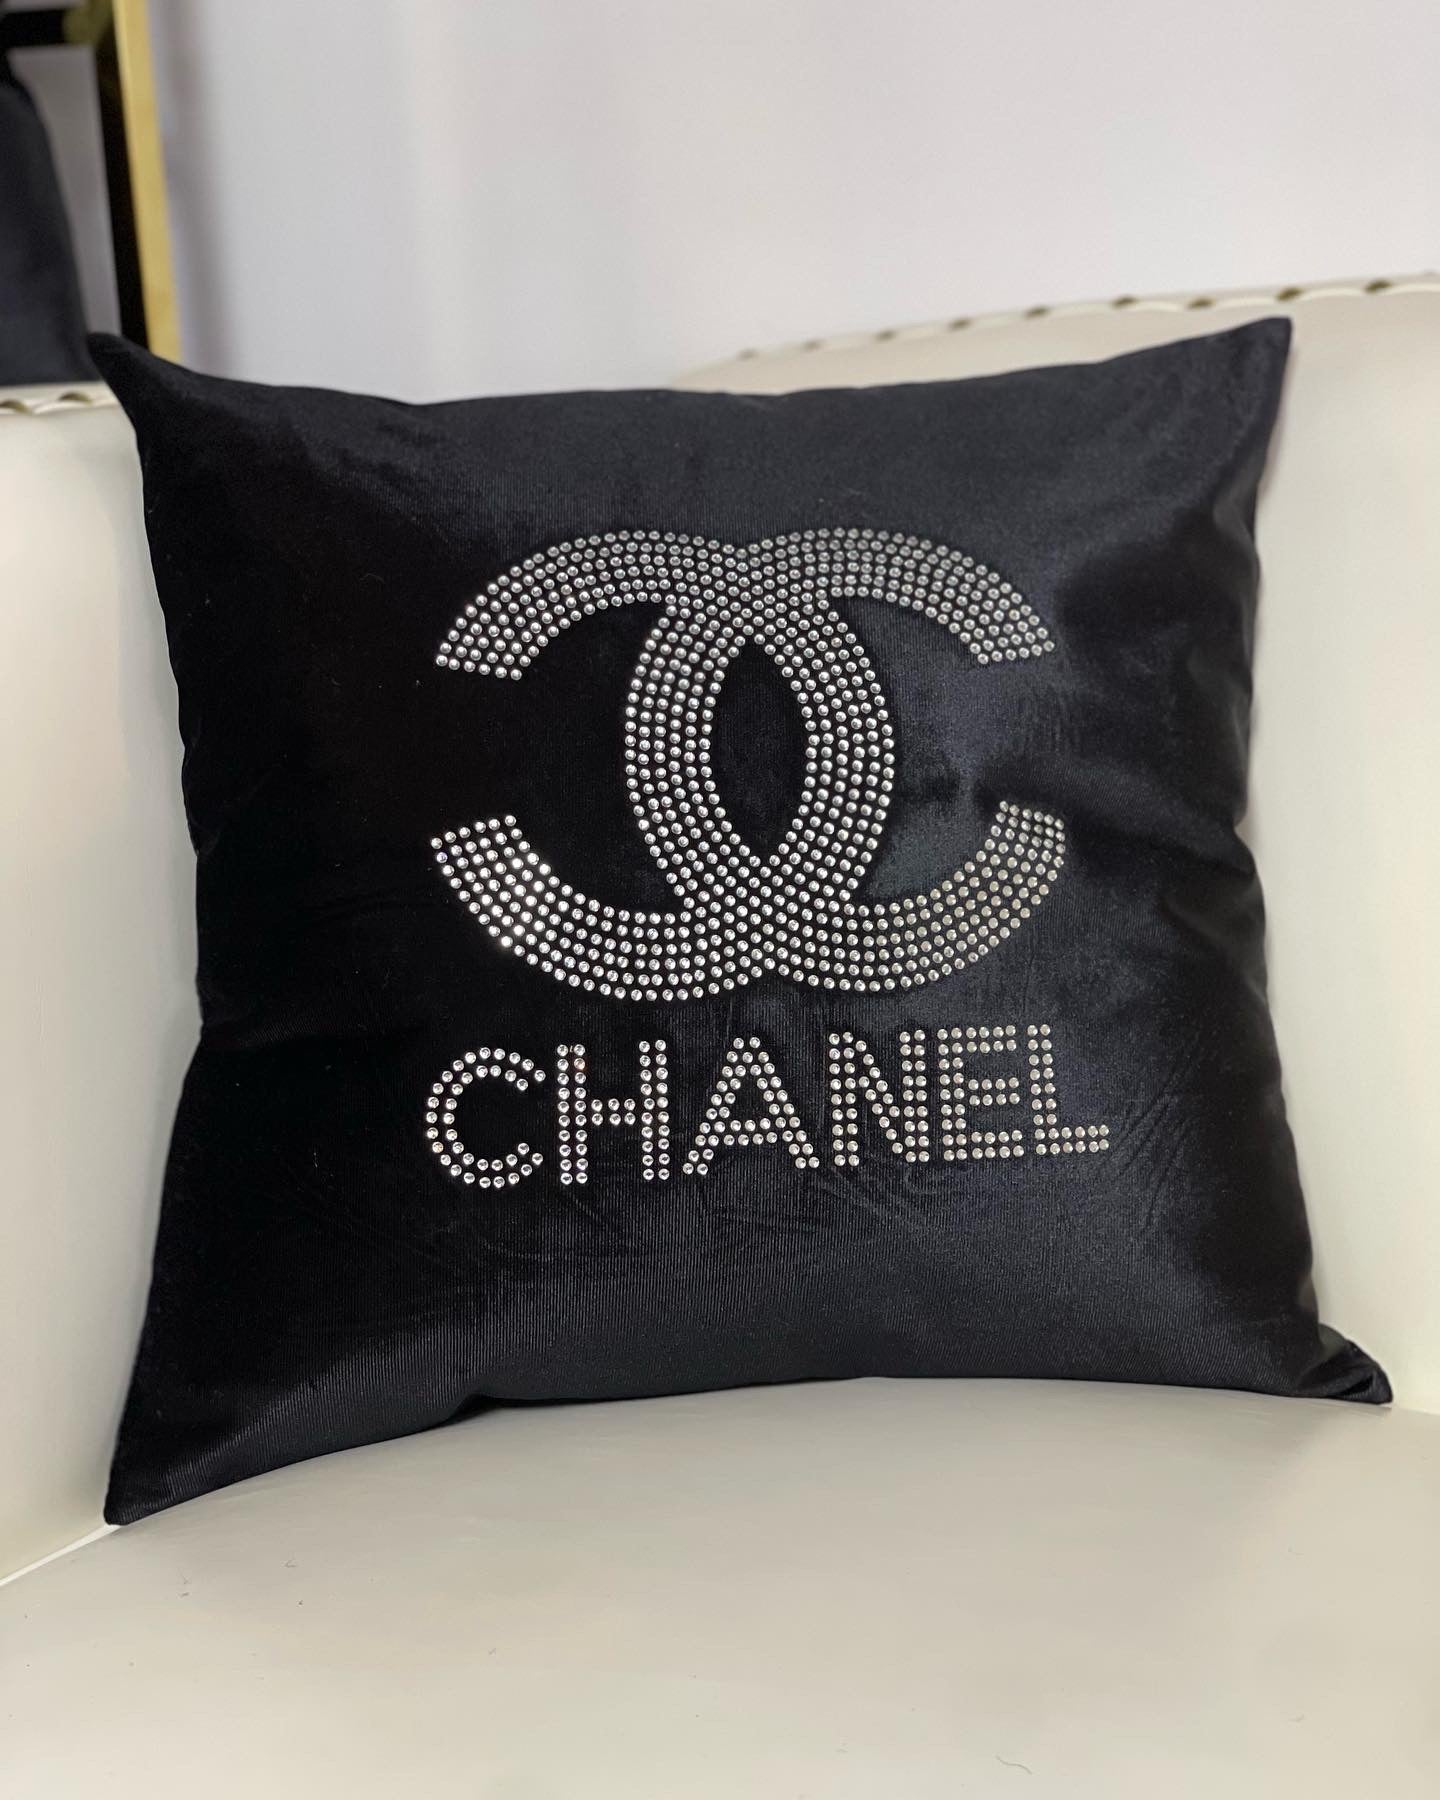  Chanel Pillow